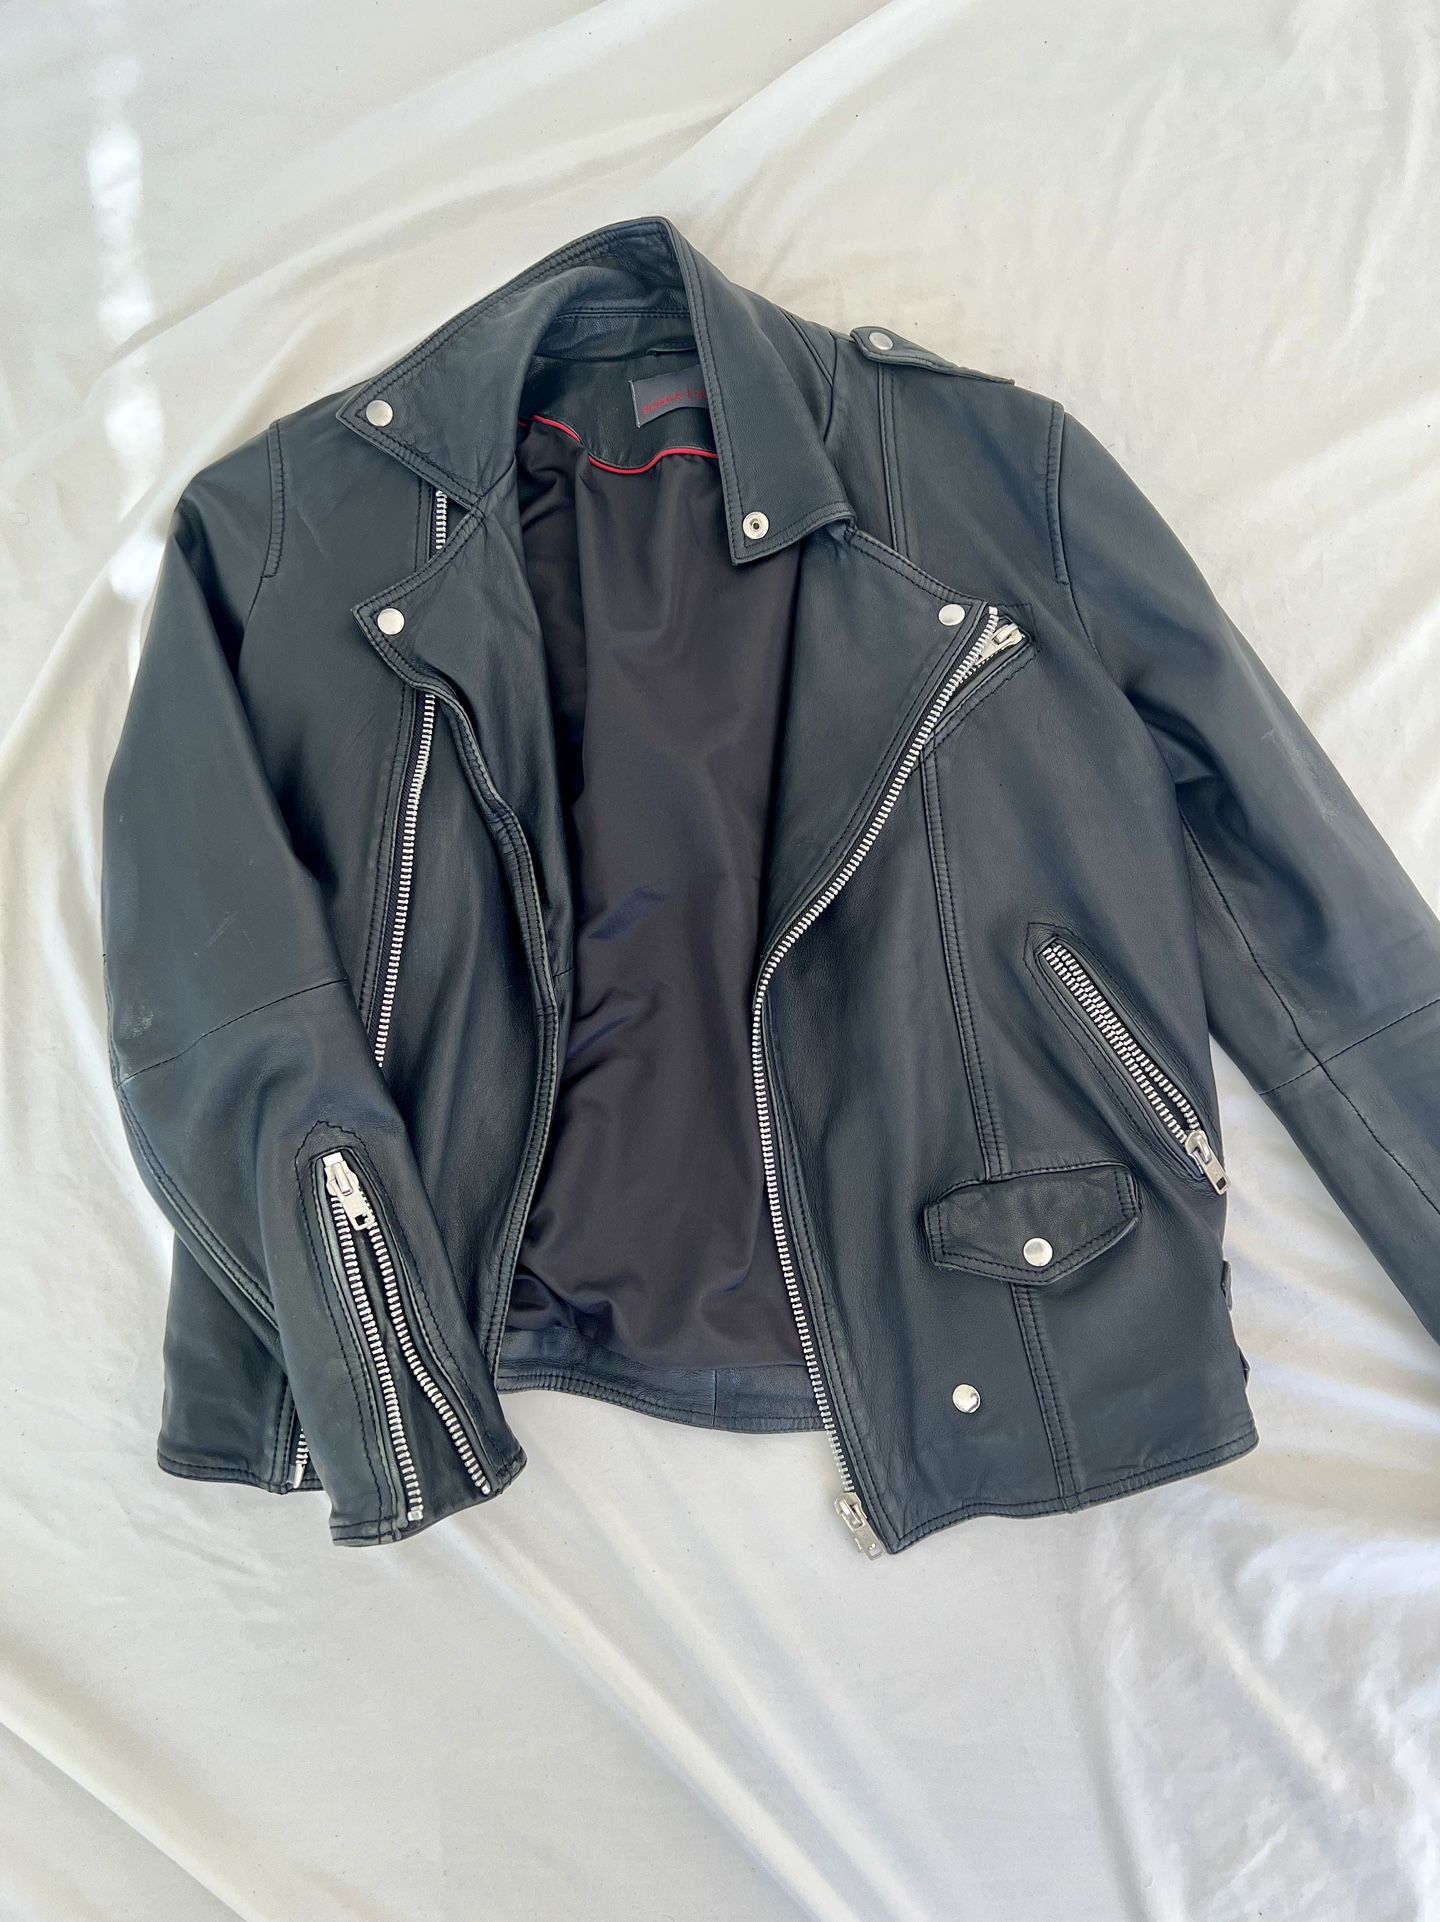 Leather Jacket (80% Off) 